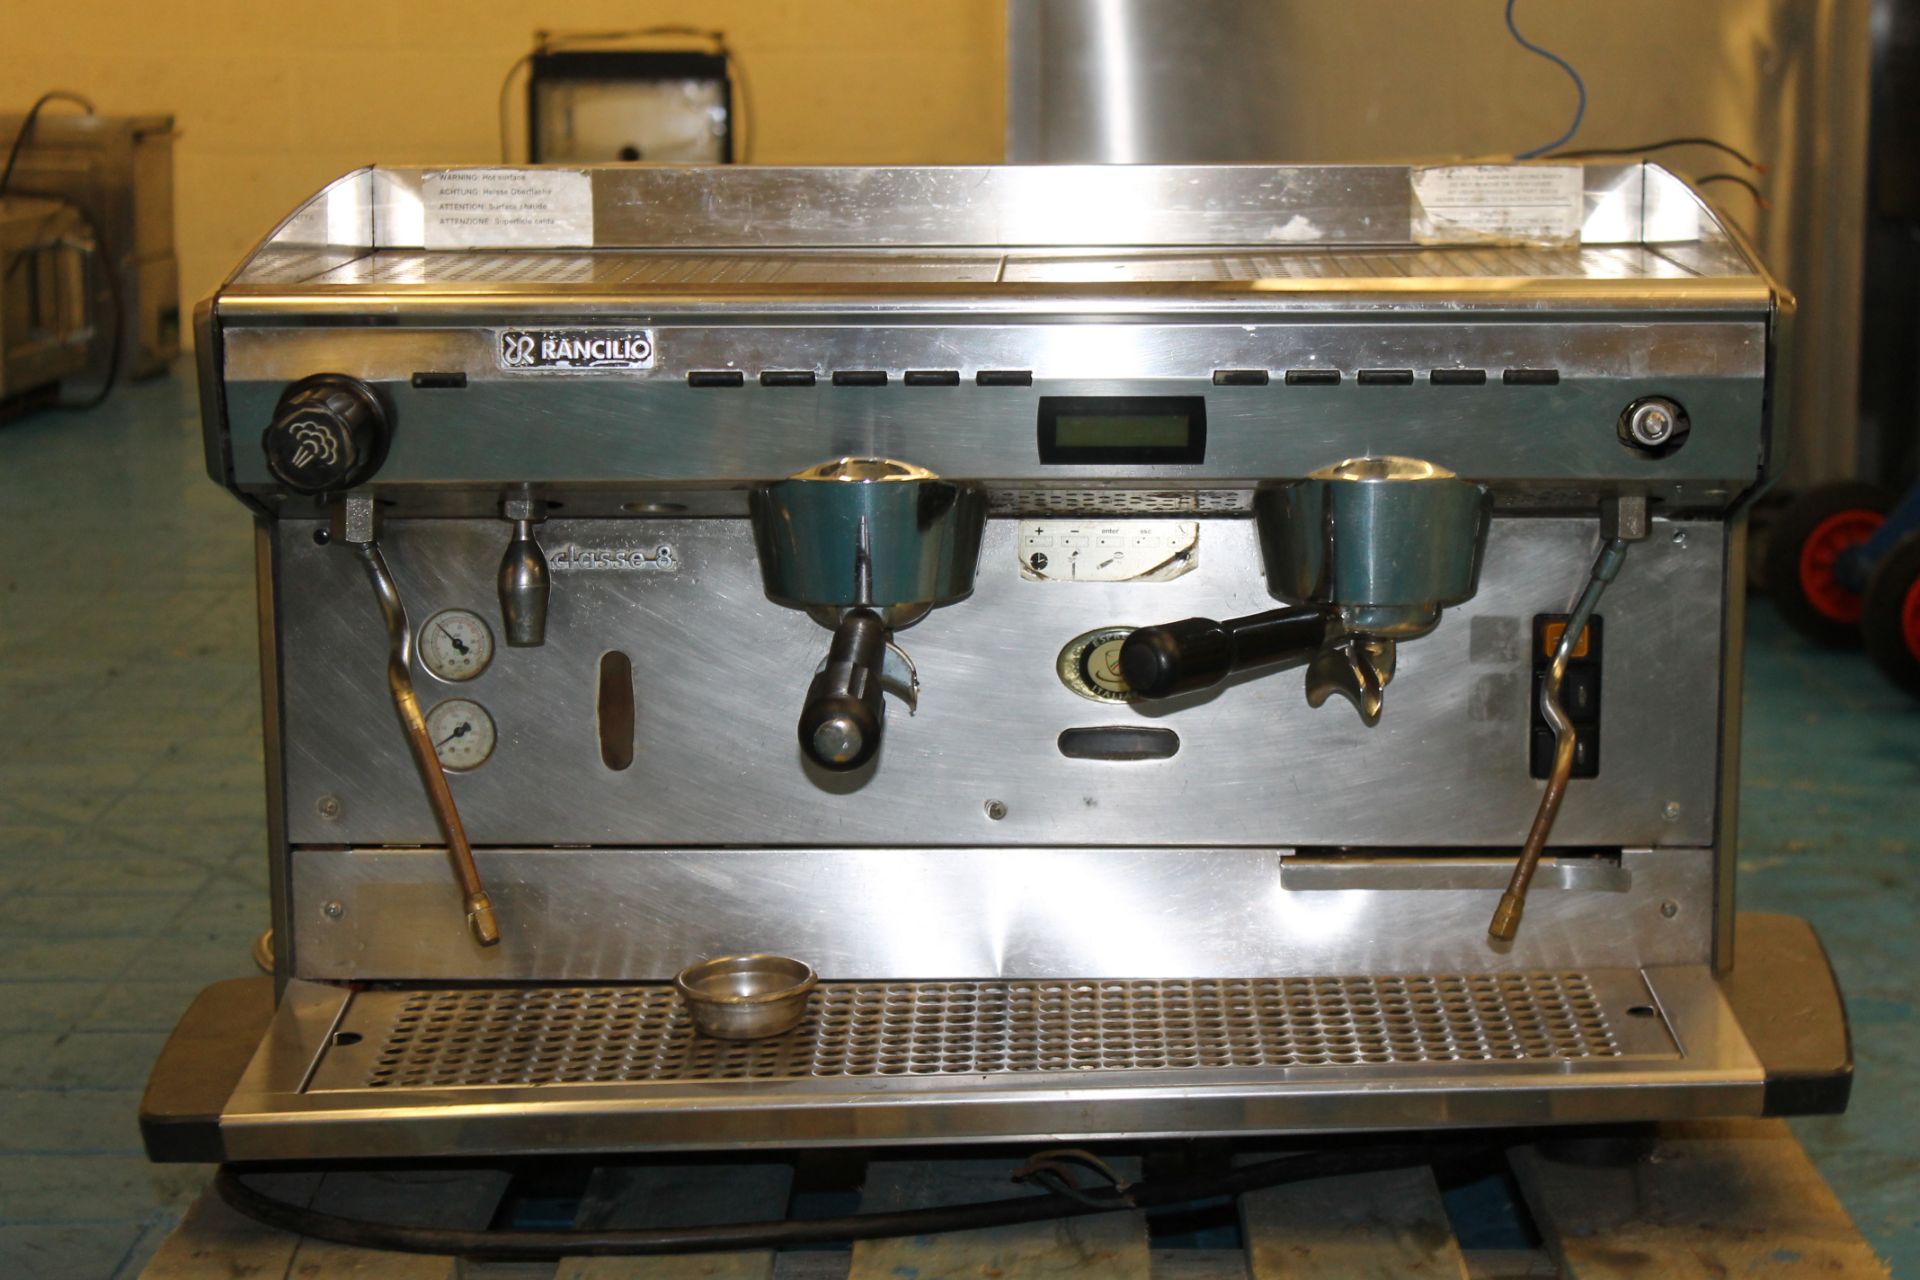 Rancilio 2 Group Espresso Coffee Machine – 1-ph – Tested - NO VAT